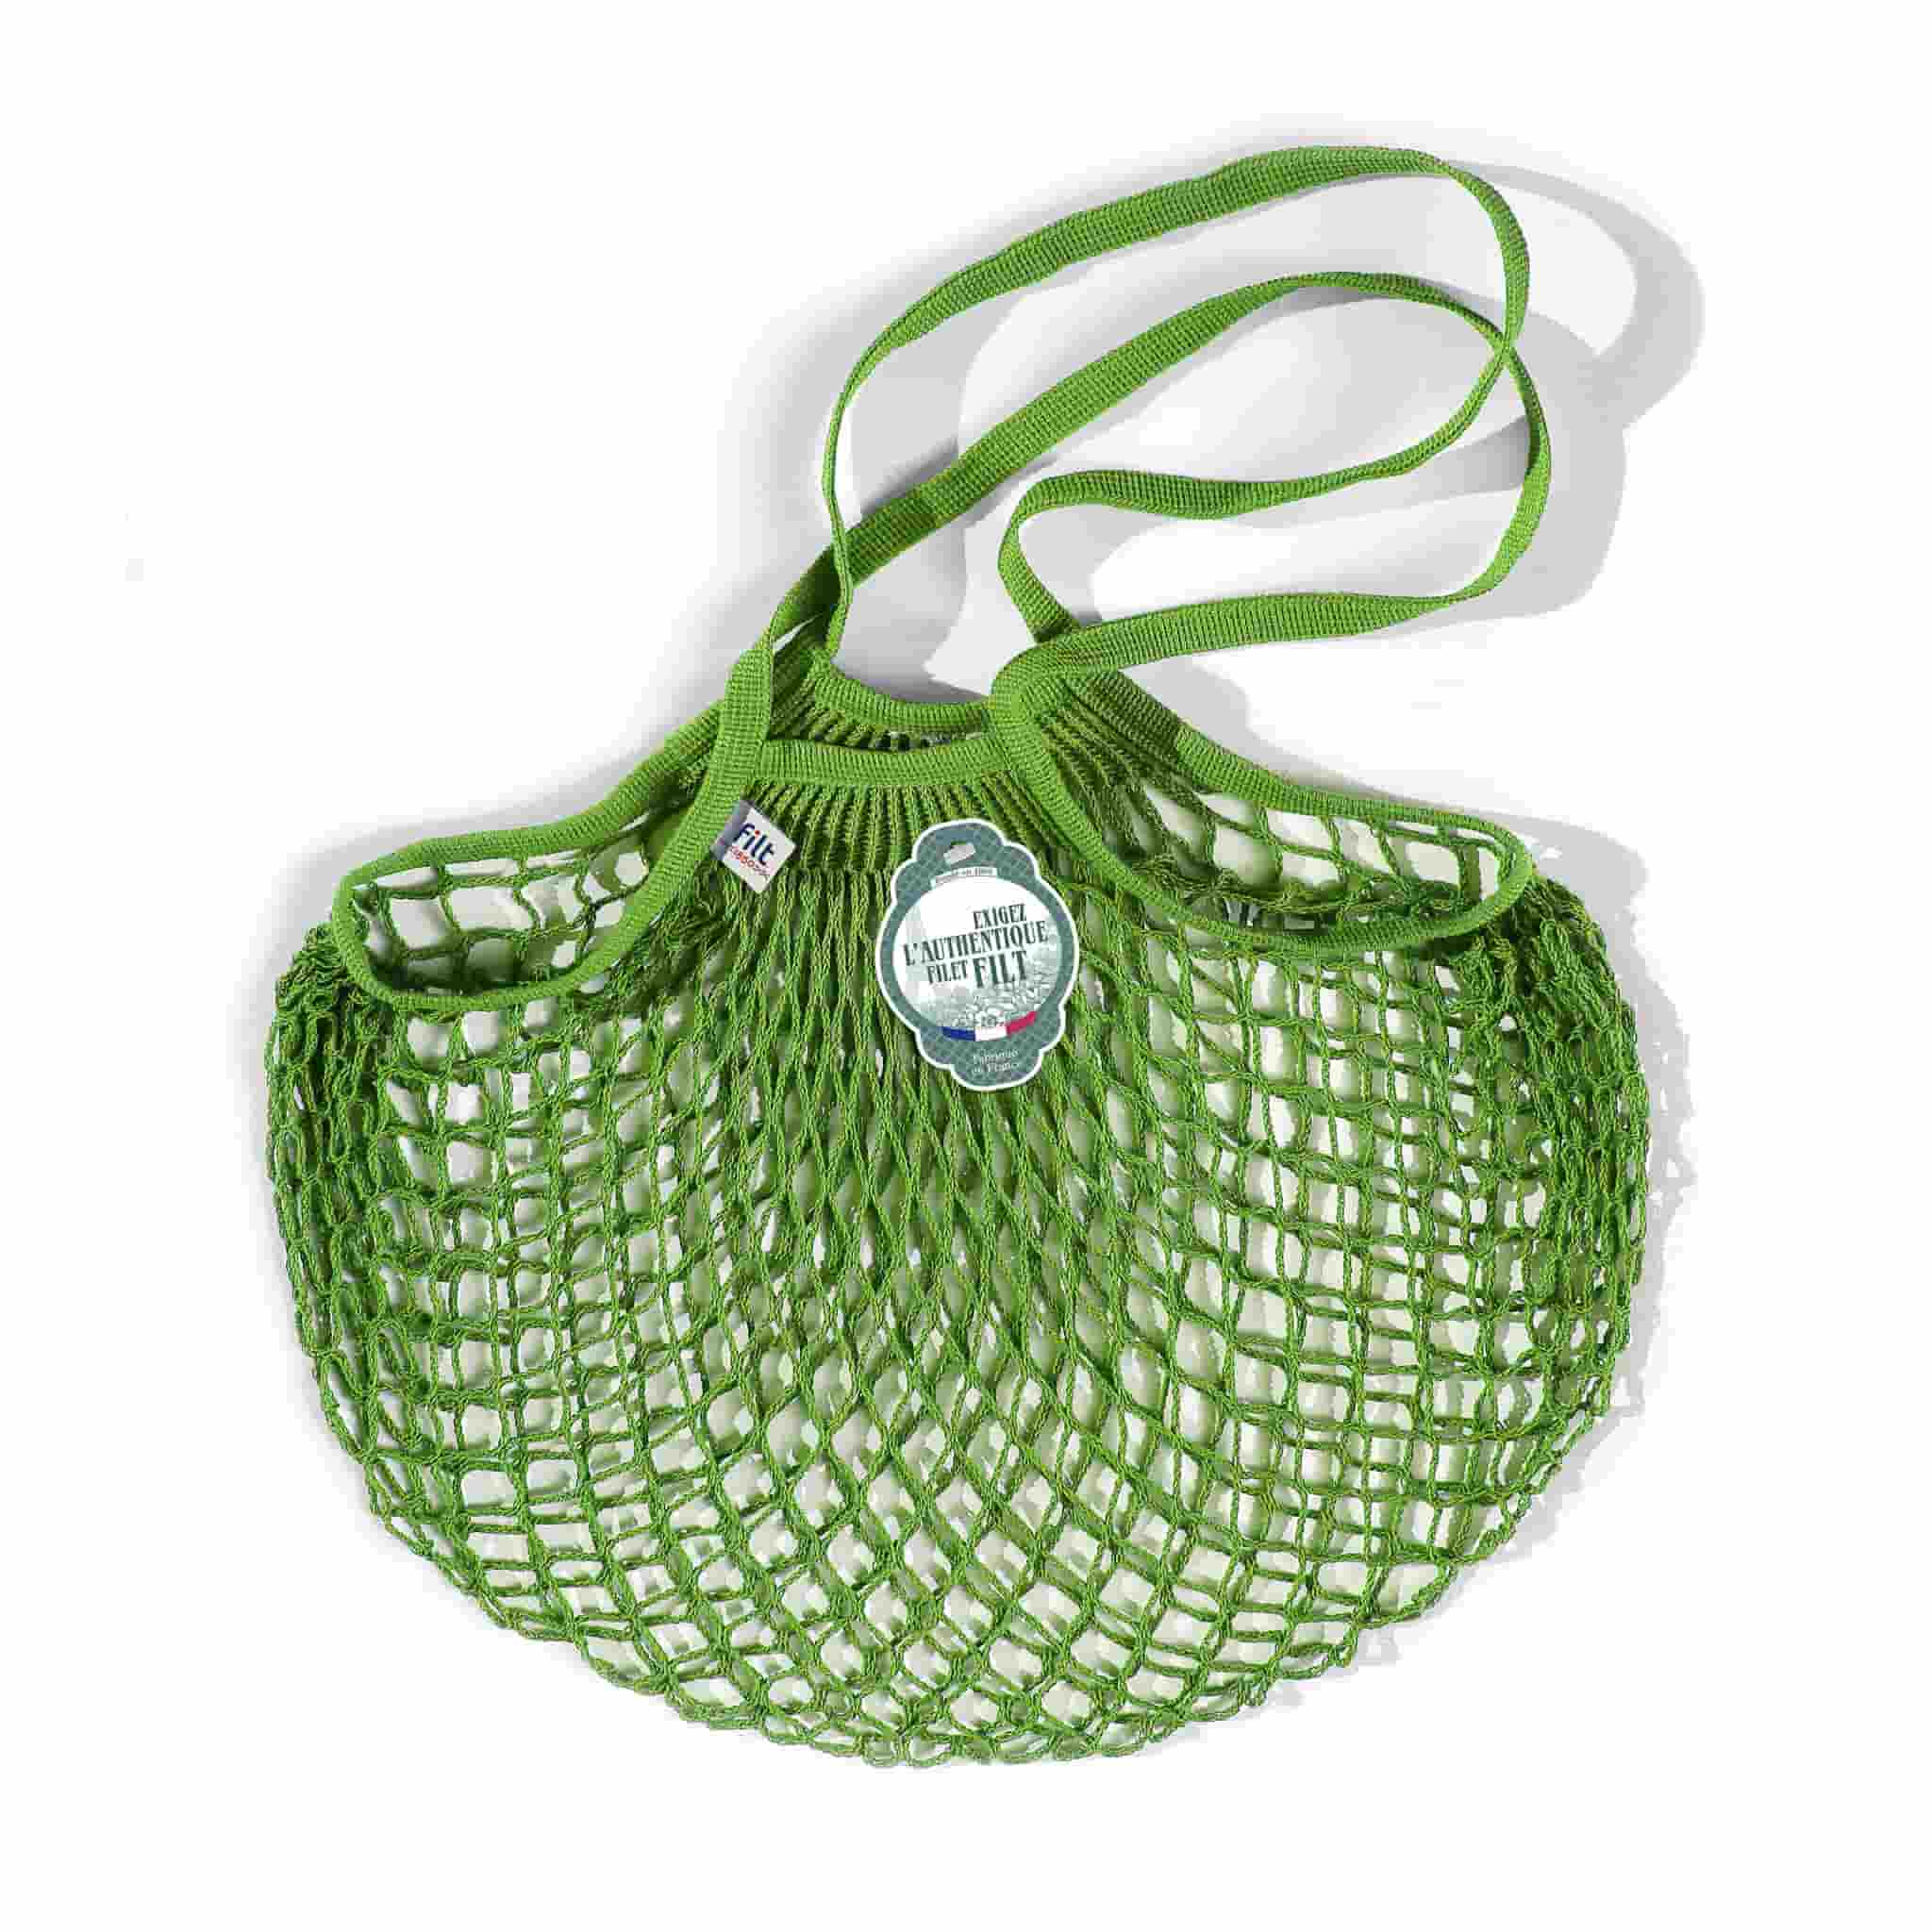 Filt String Bag in Lime Green, Long Handle